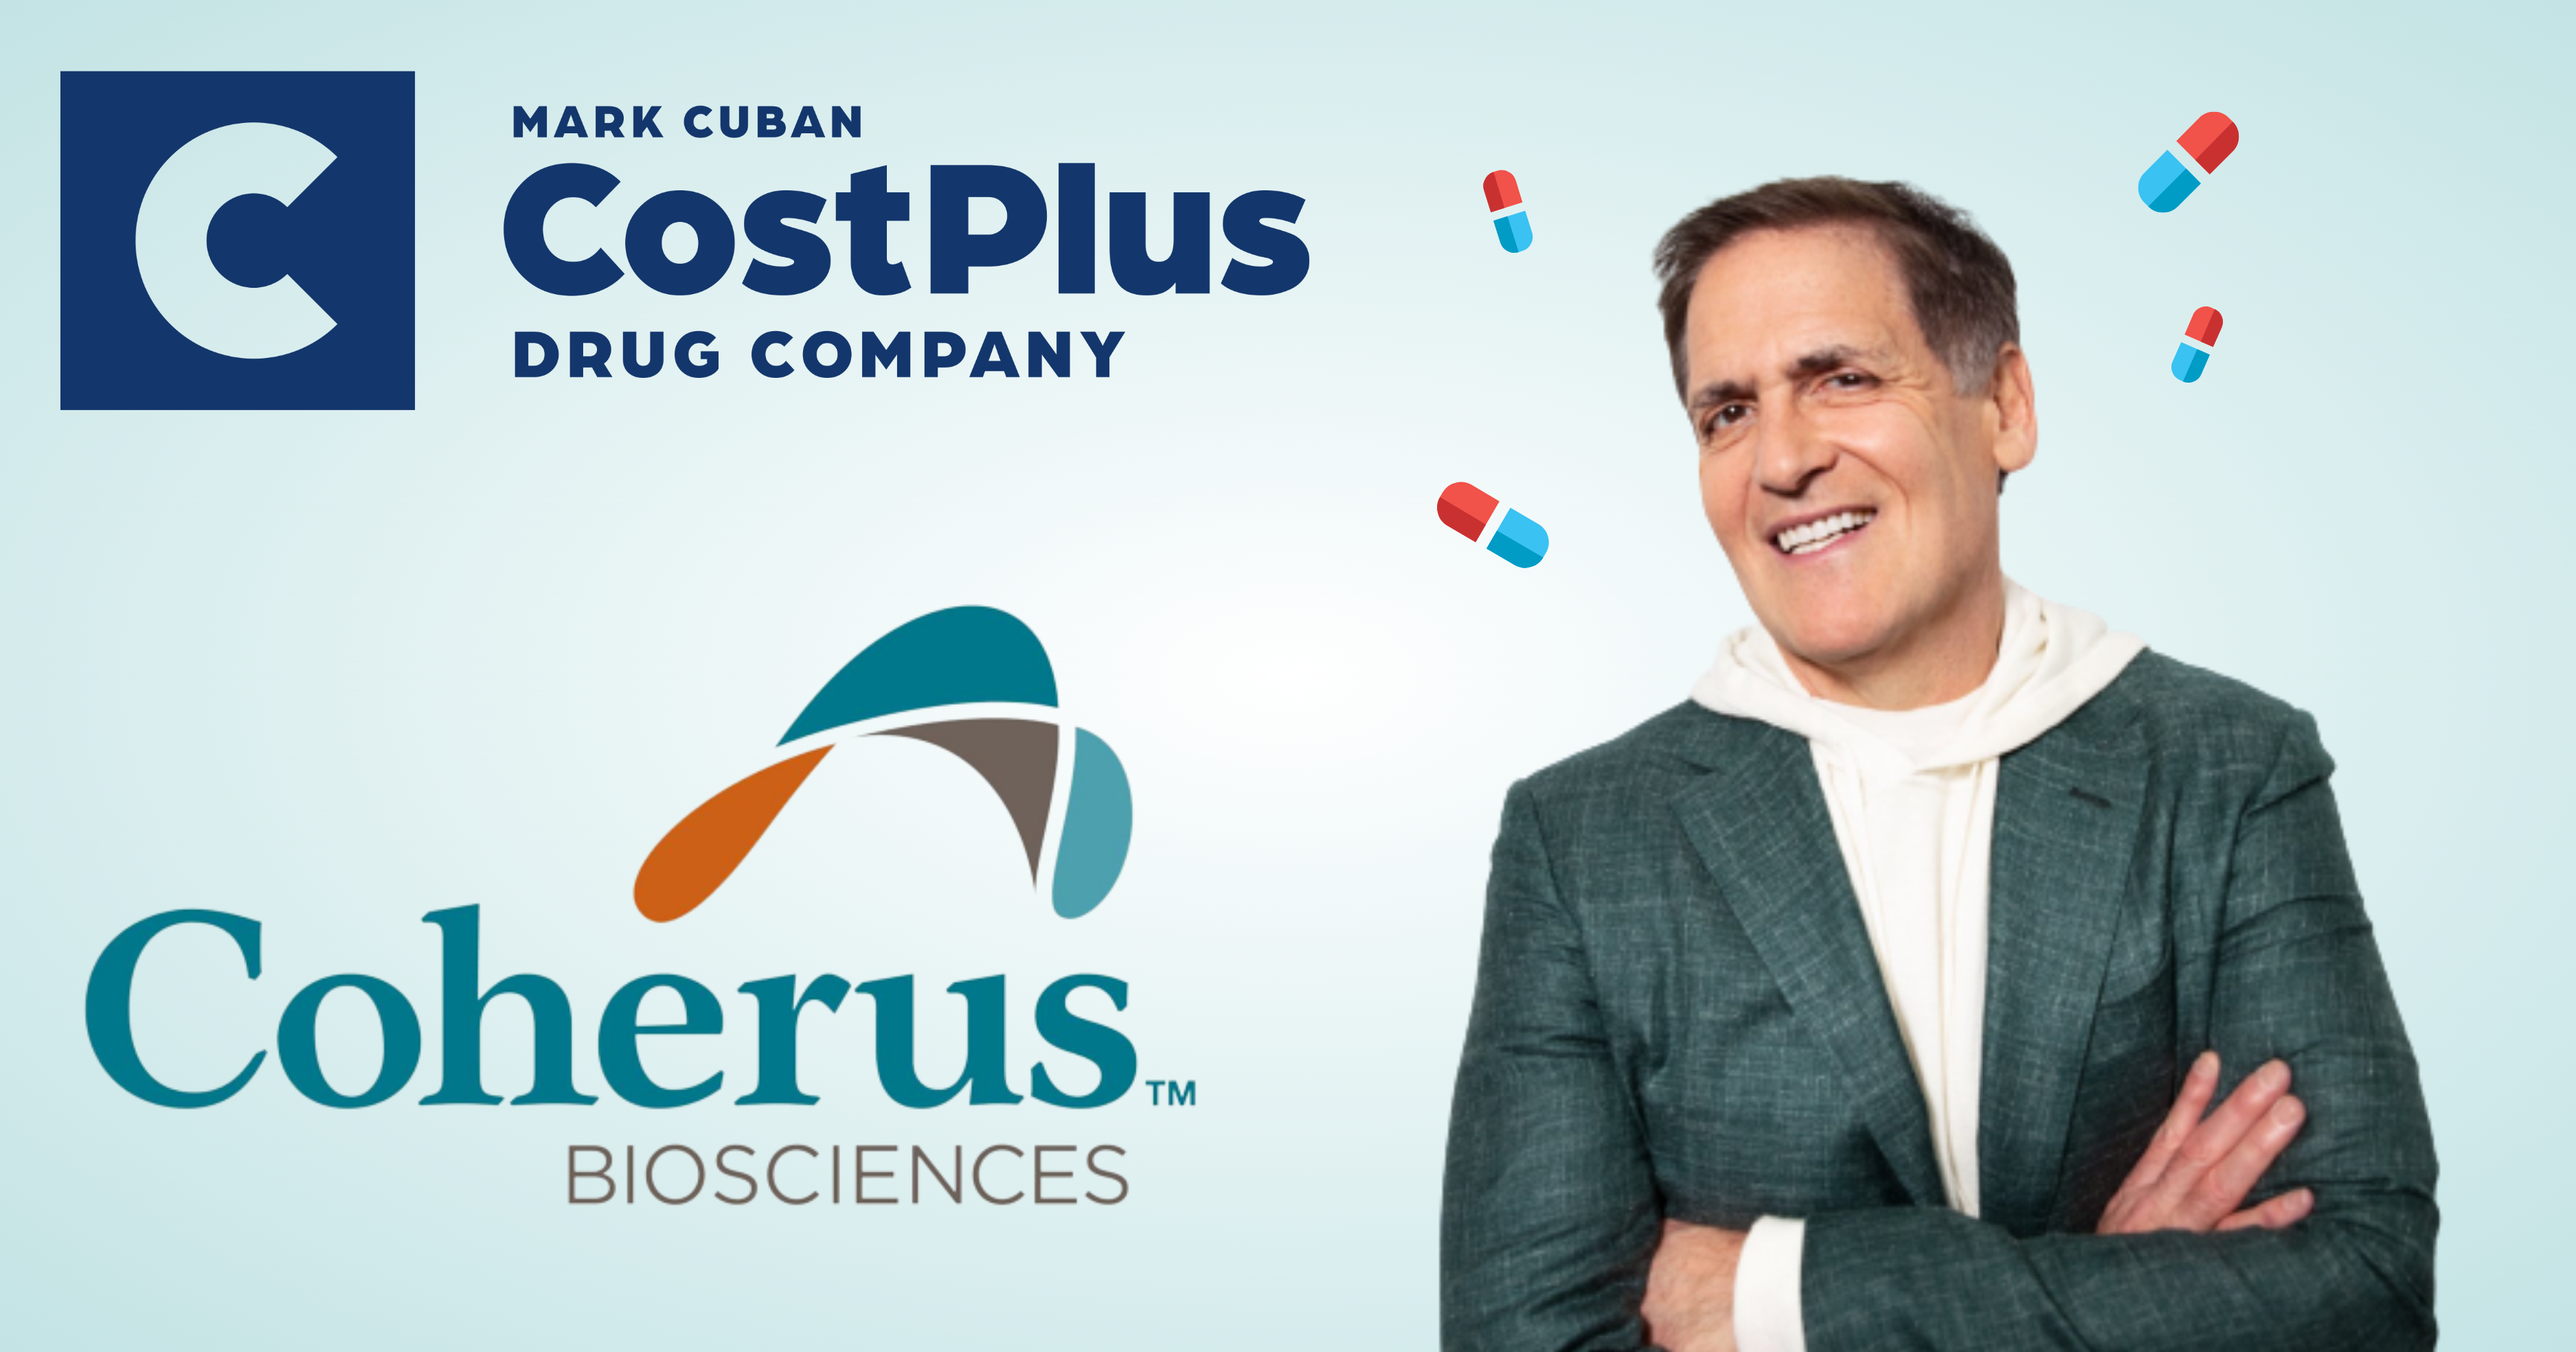 Mark Cuban’s Online Pharmacy Partners With Coherus Biosciences for Humira Biosimilar